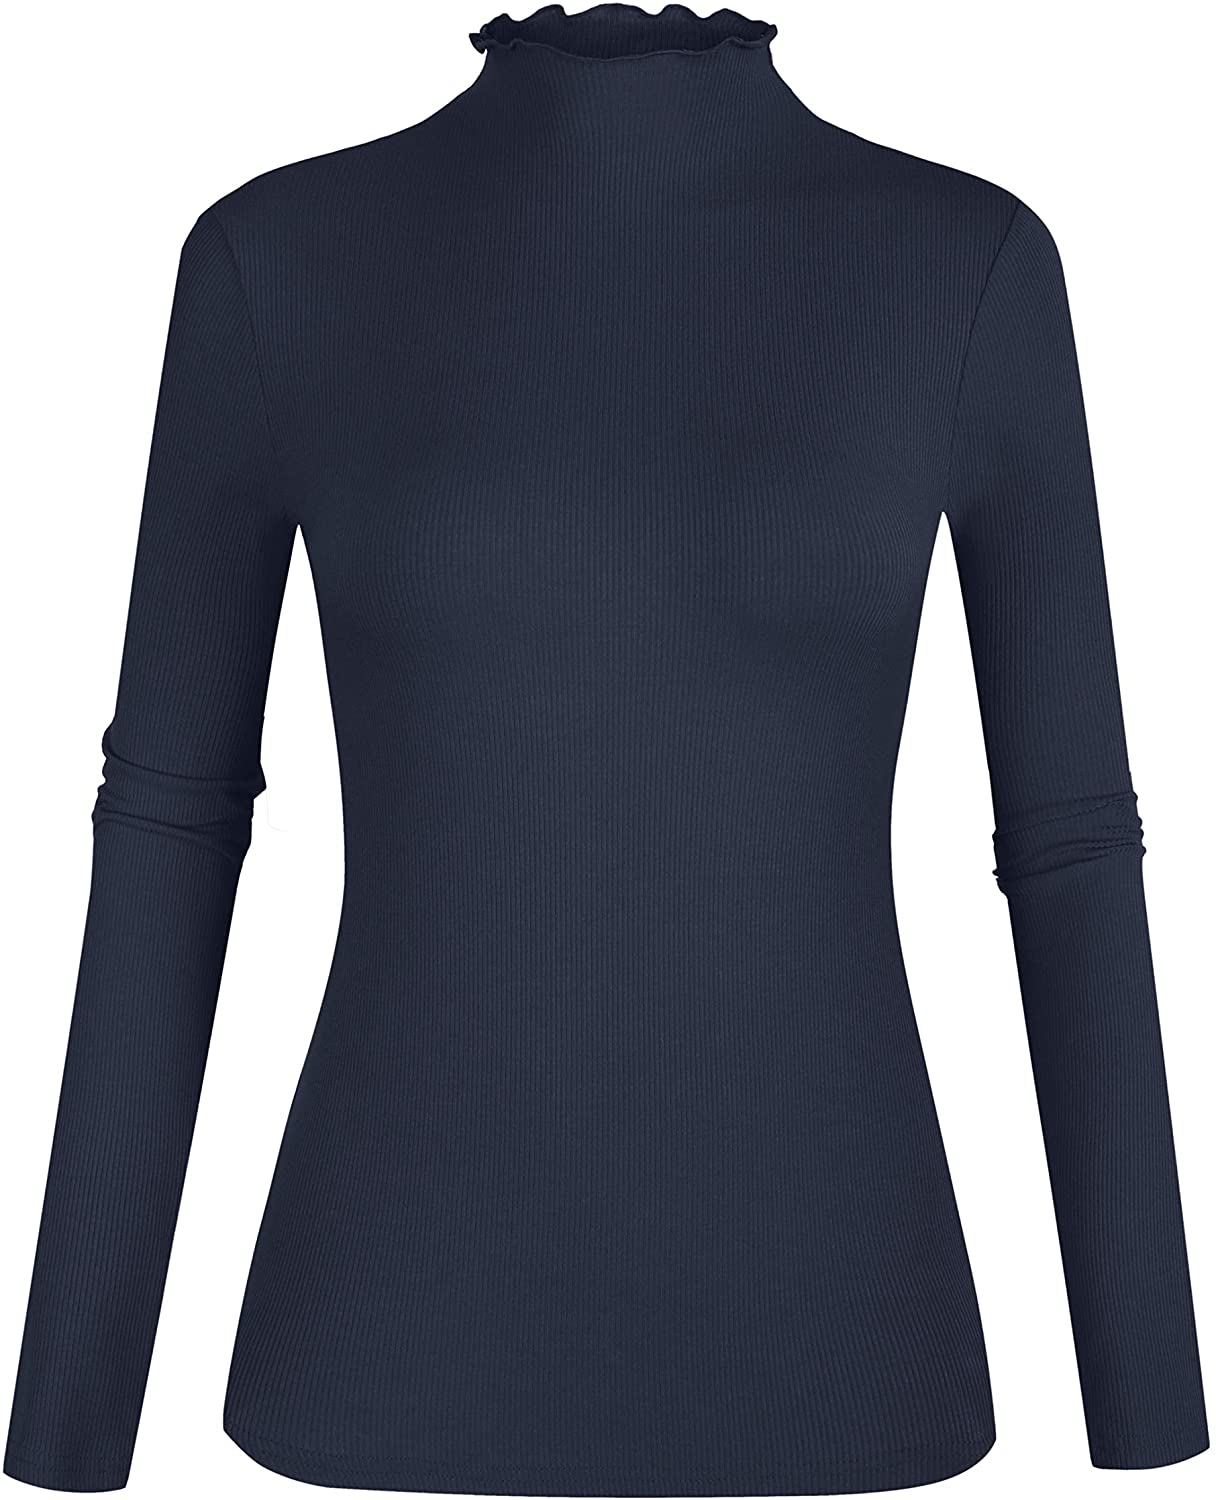 POPZONE Women's Lettuce Trim Mockneck Long Sleeve Slim Fit Ribbed Knit Tee Shirt